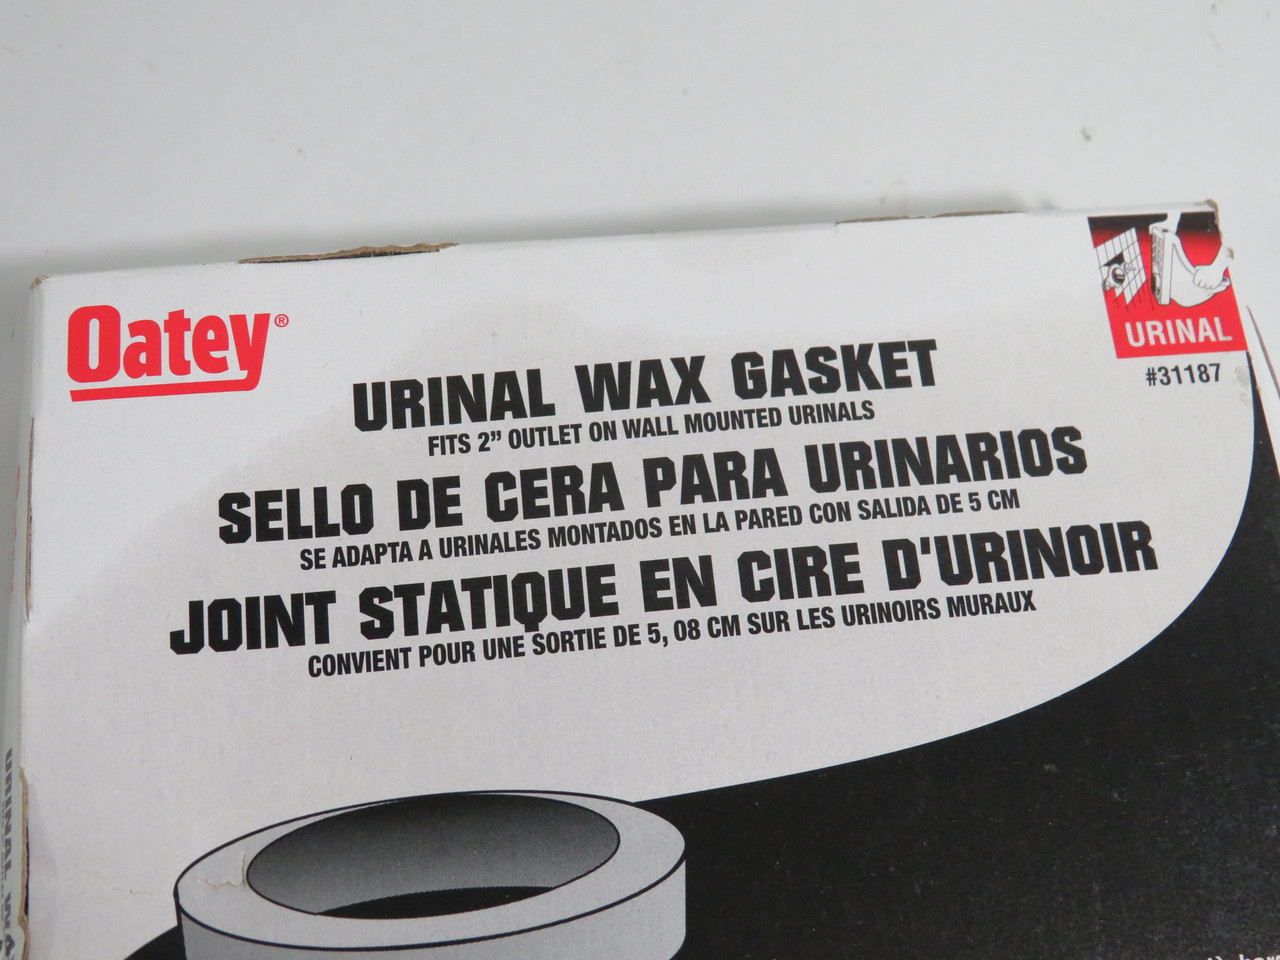 Oatey 31187 Urinal Wax Gasket 2" Waste Line NEW